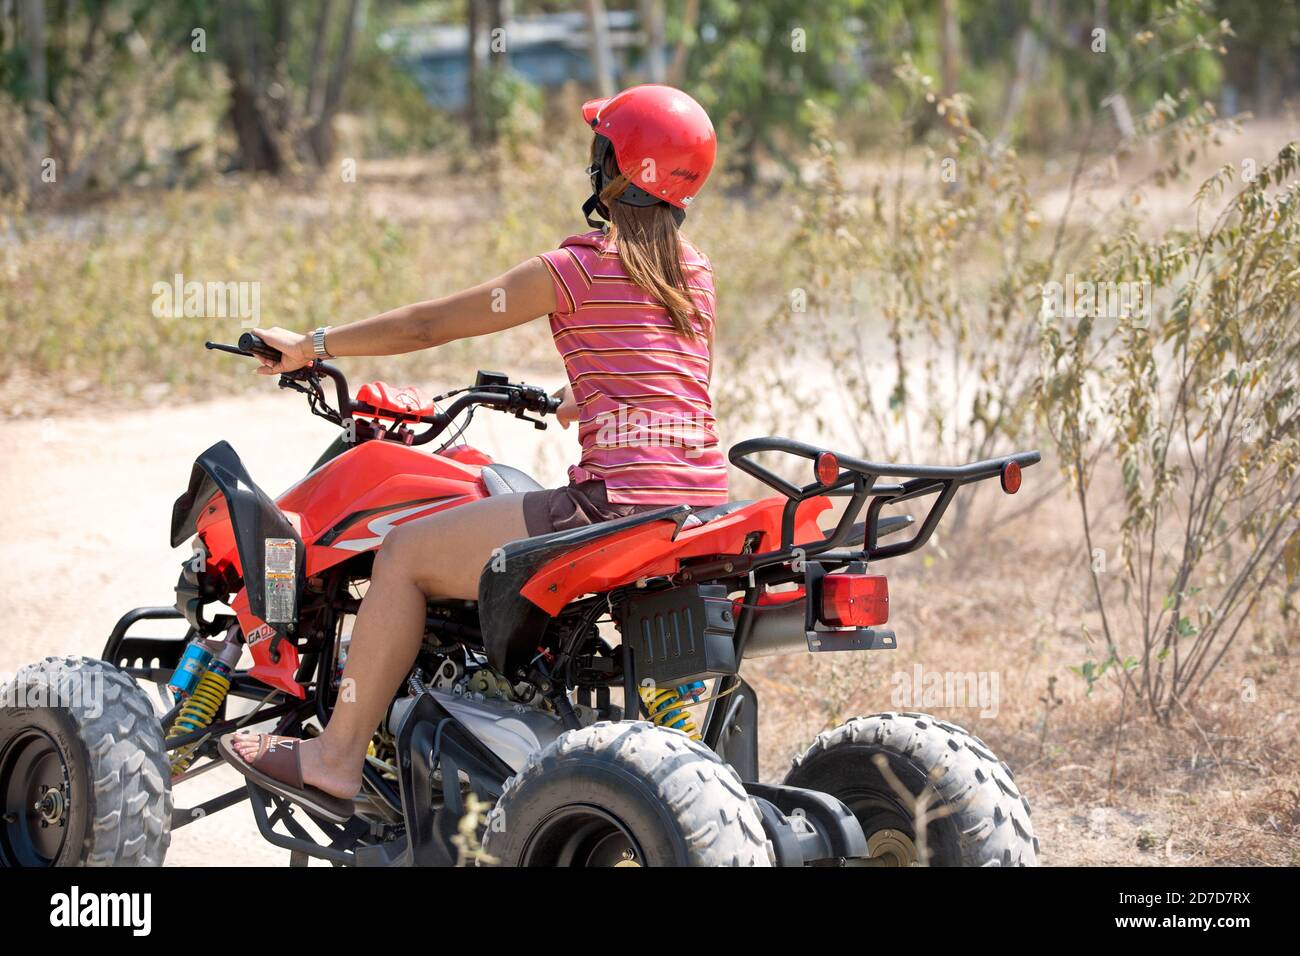 Woman ATV quad bike female rider. Thailand S. E. Asia Stock Photo - Alamy